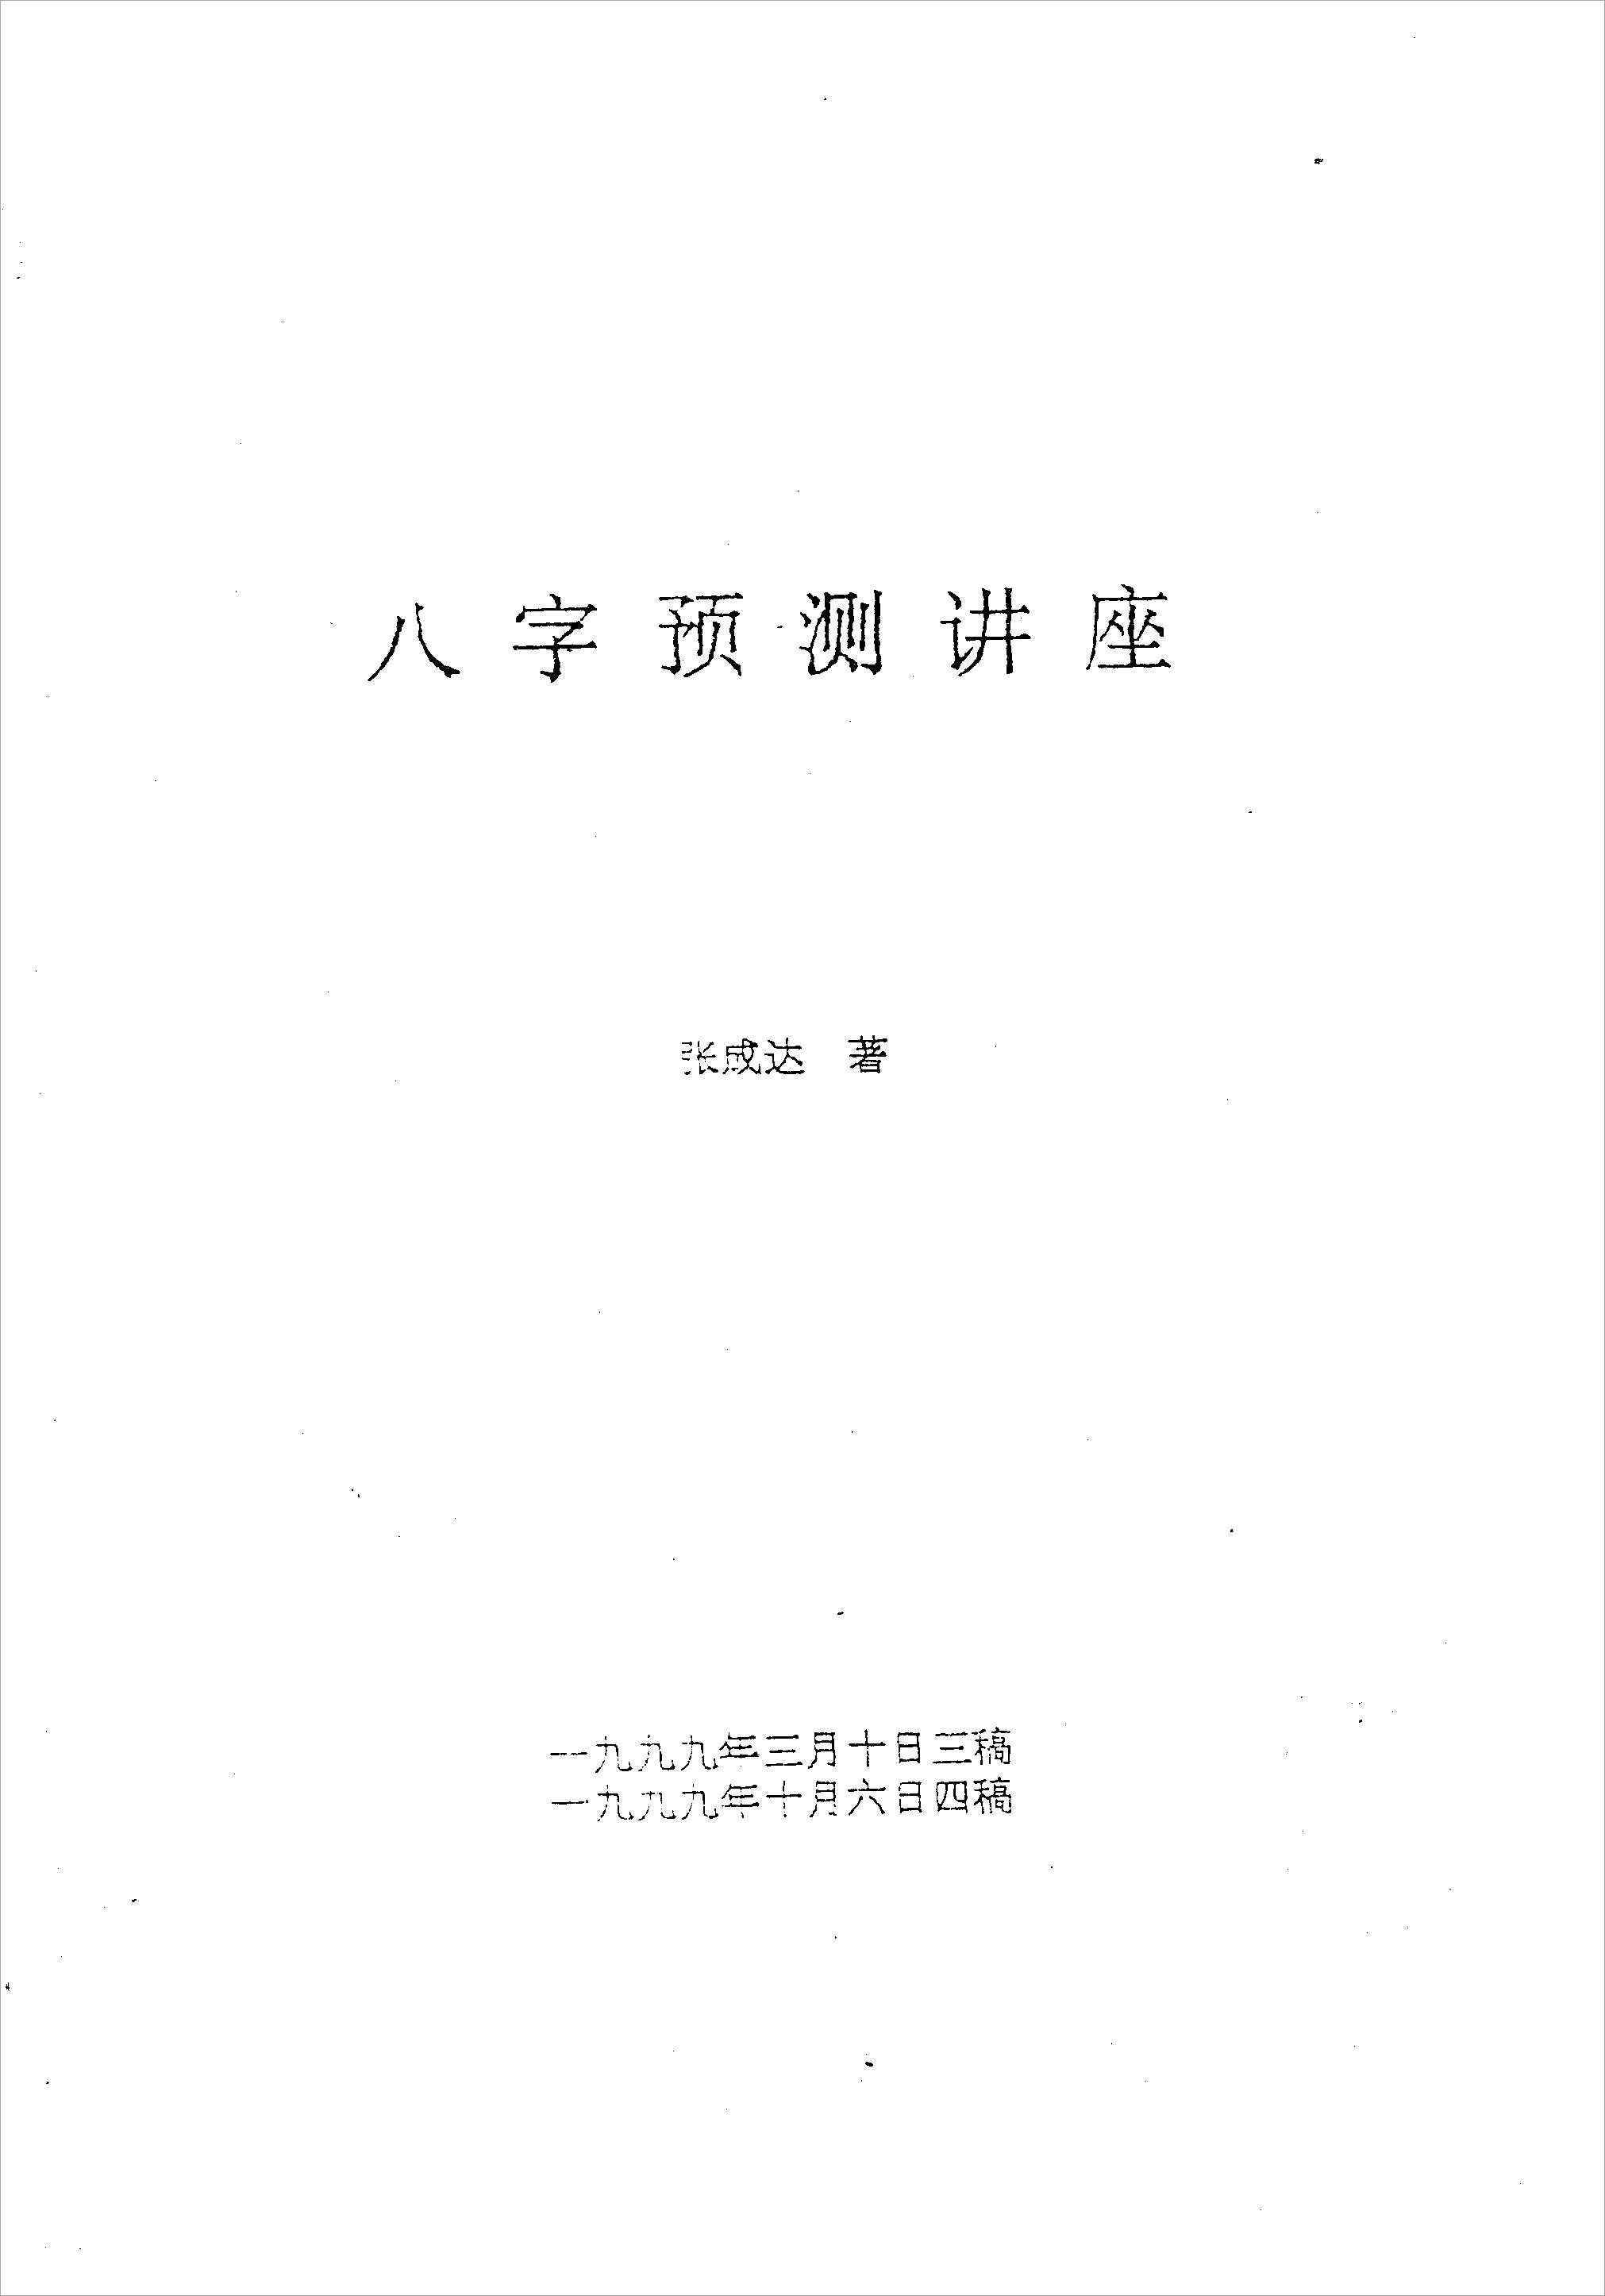 Zhang Chengda-Bazi Forecasting Lecture.pdf